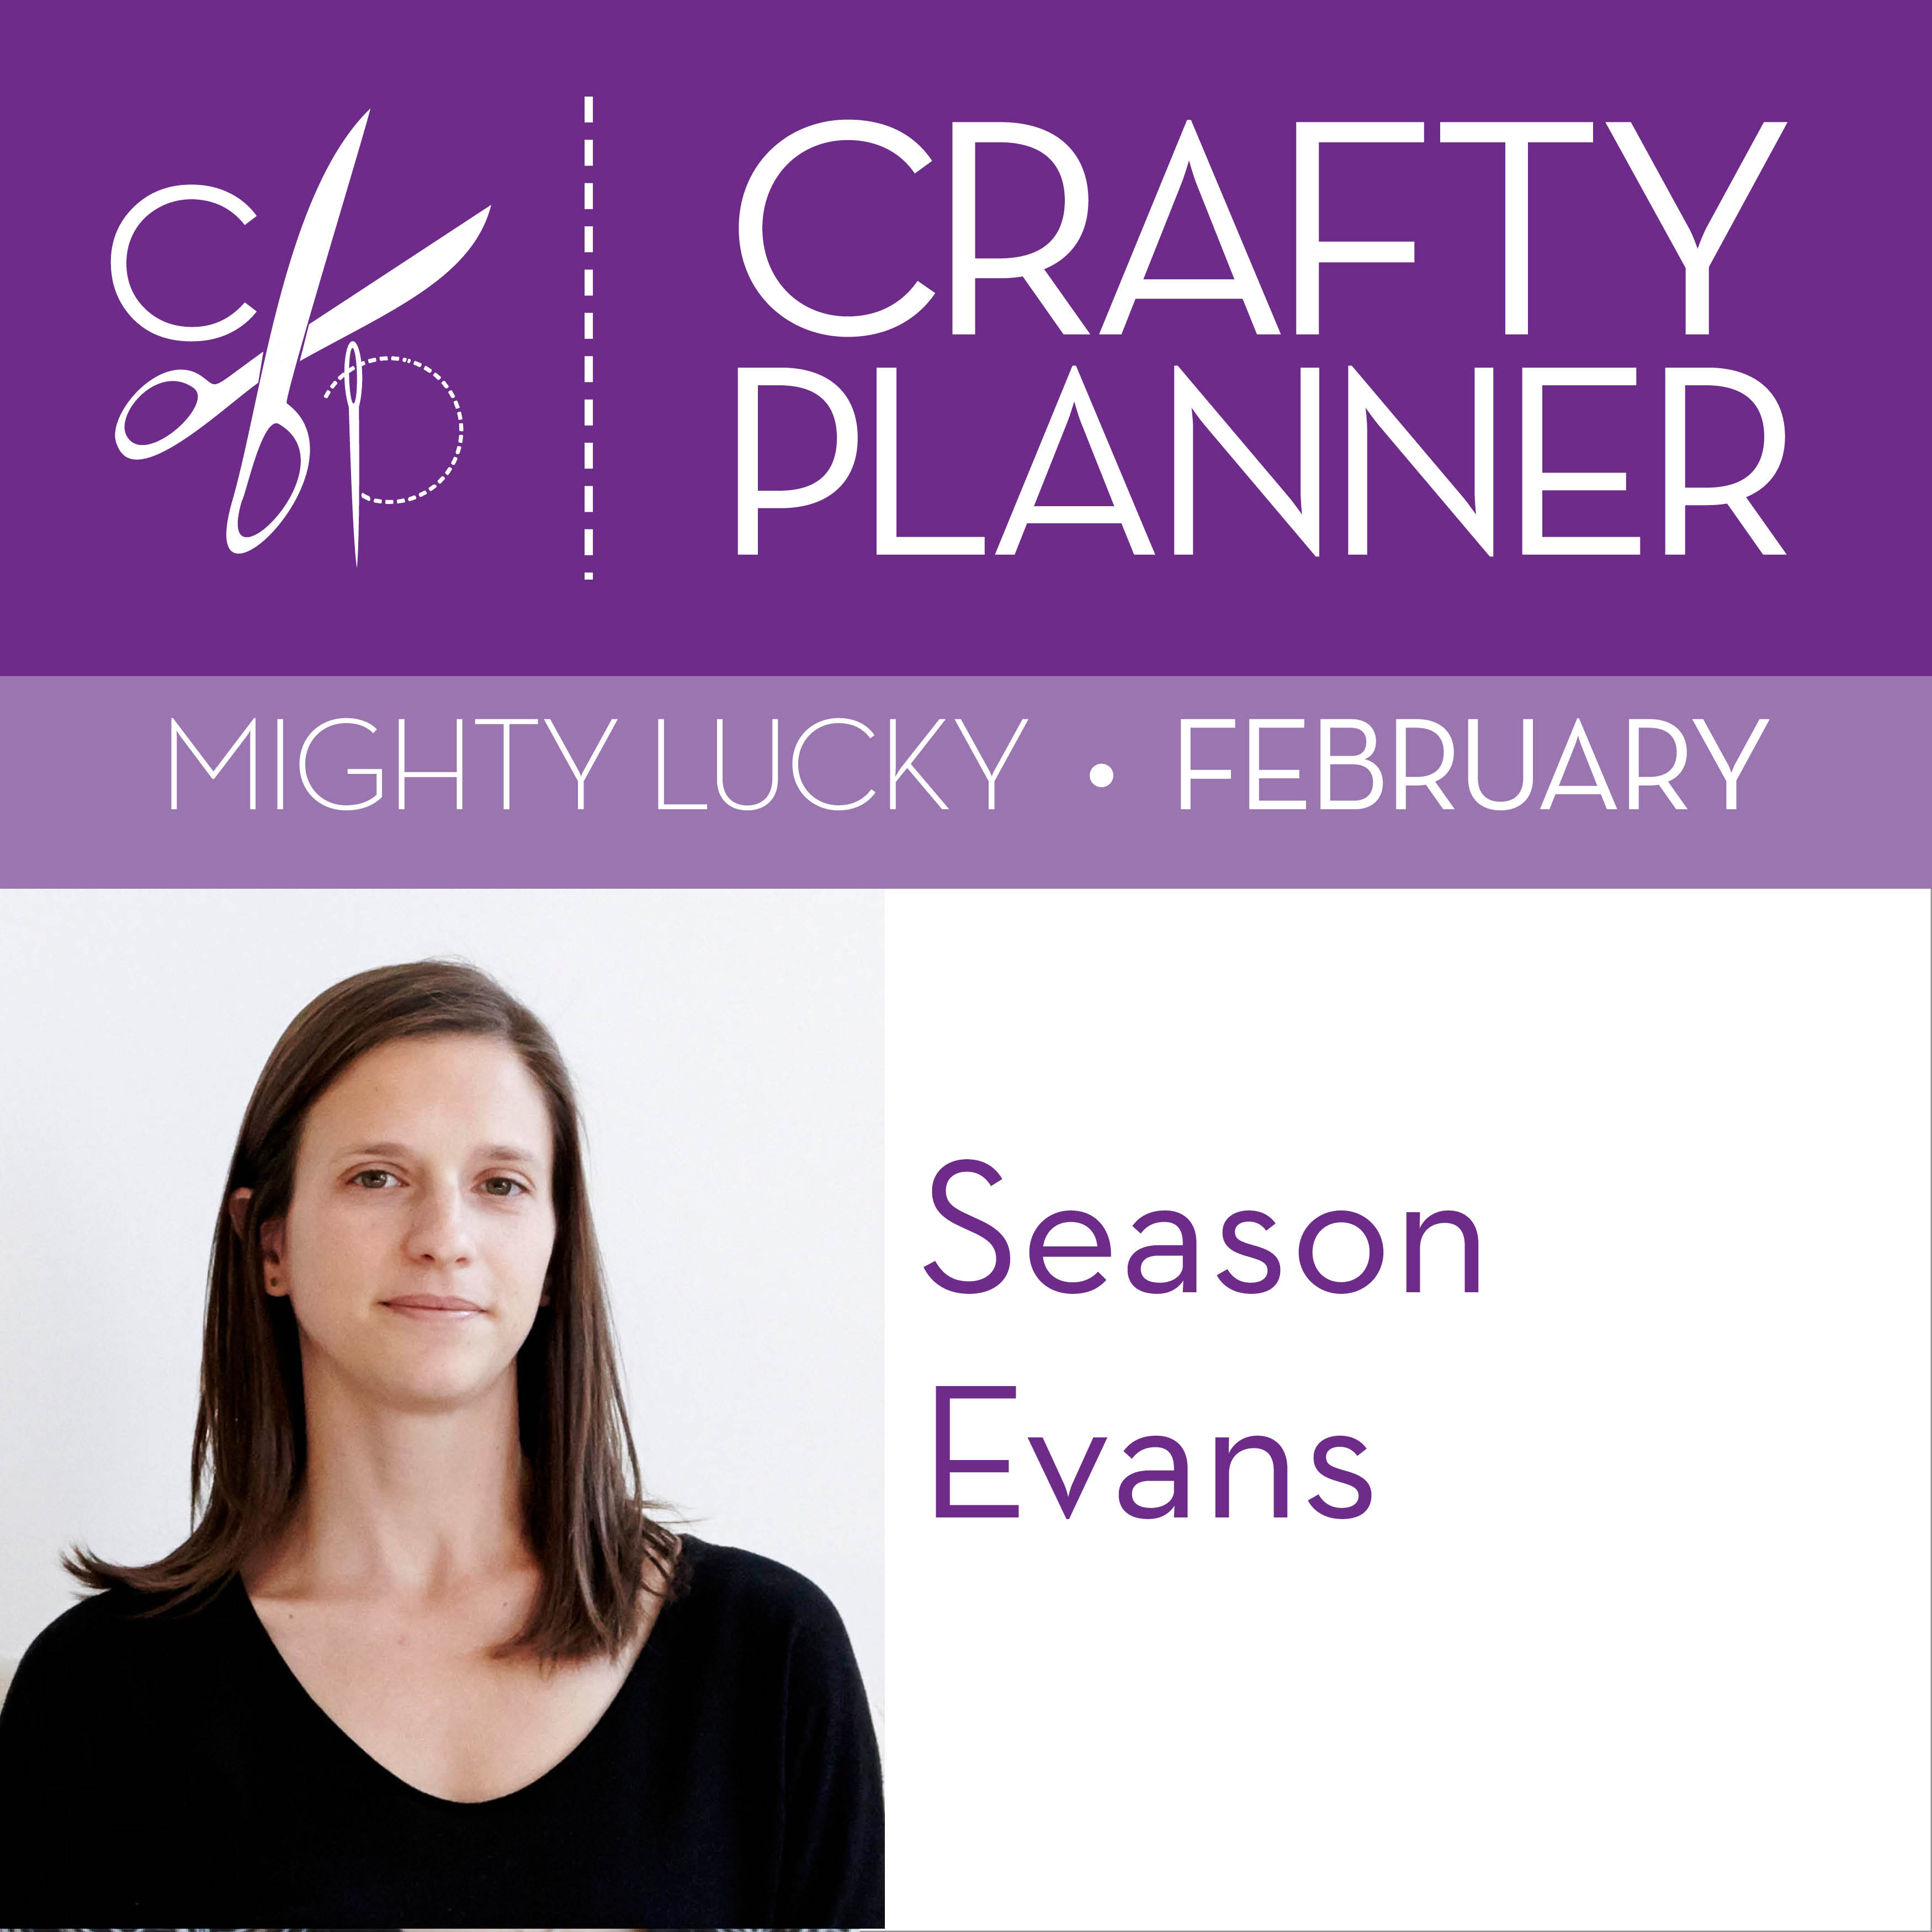 Season Evans - Mighty Lucky February Edition